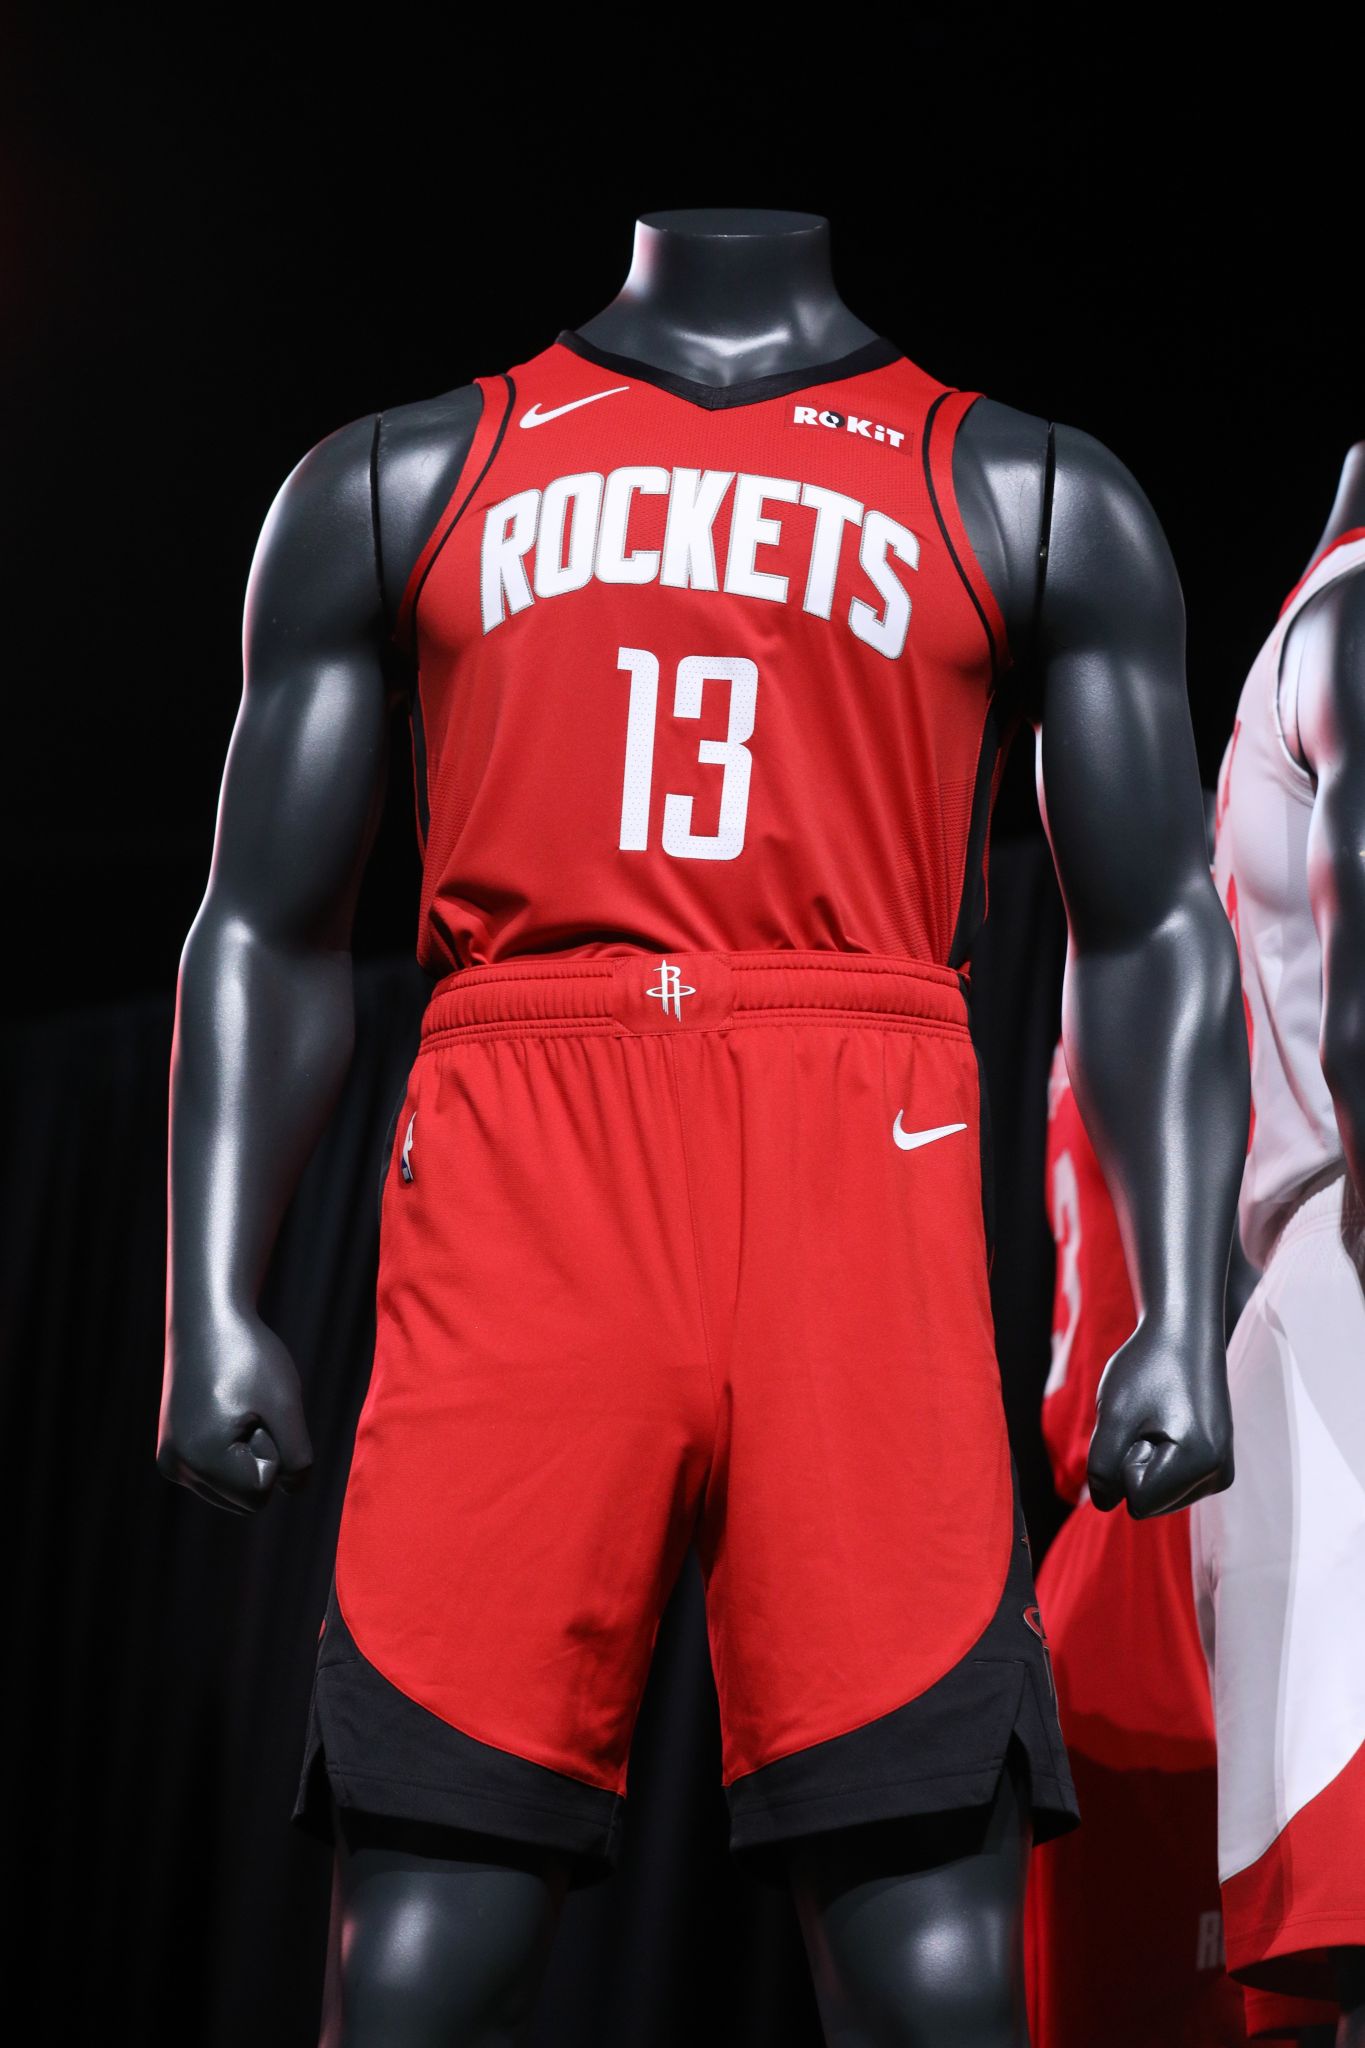 Rockets unveil new uniforms for next season - NBC Sports